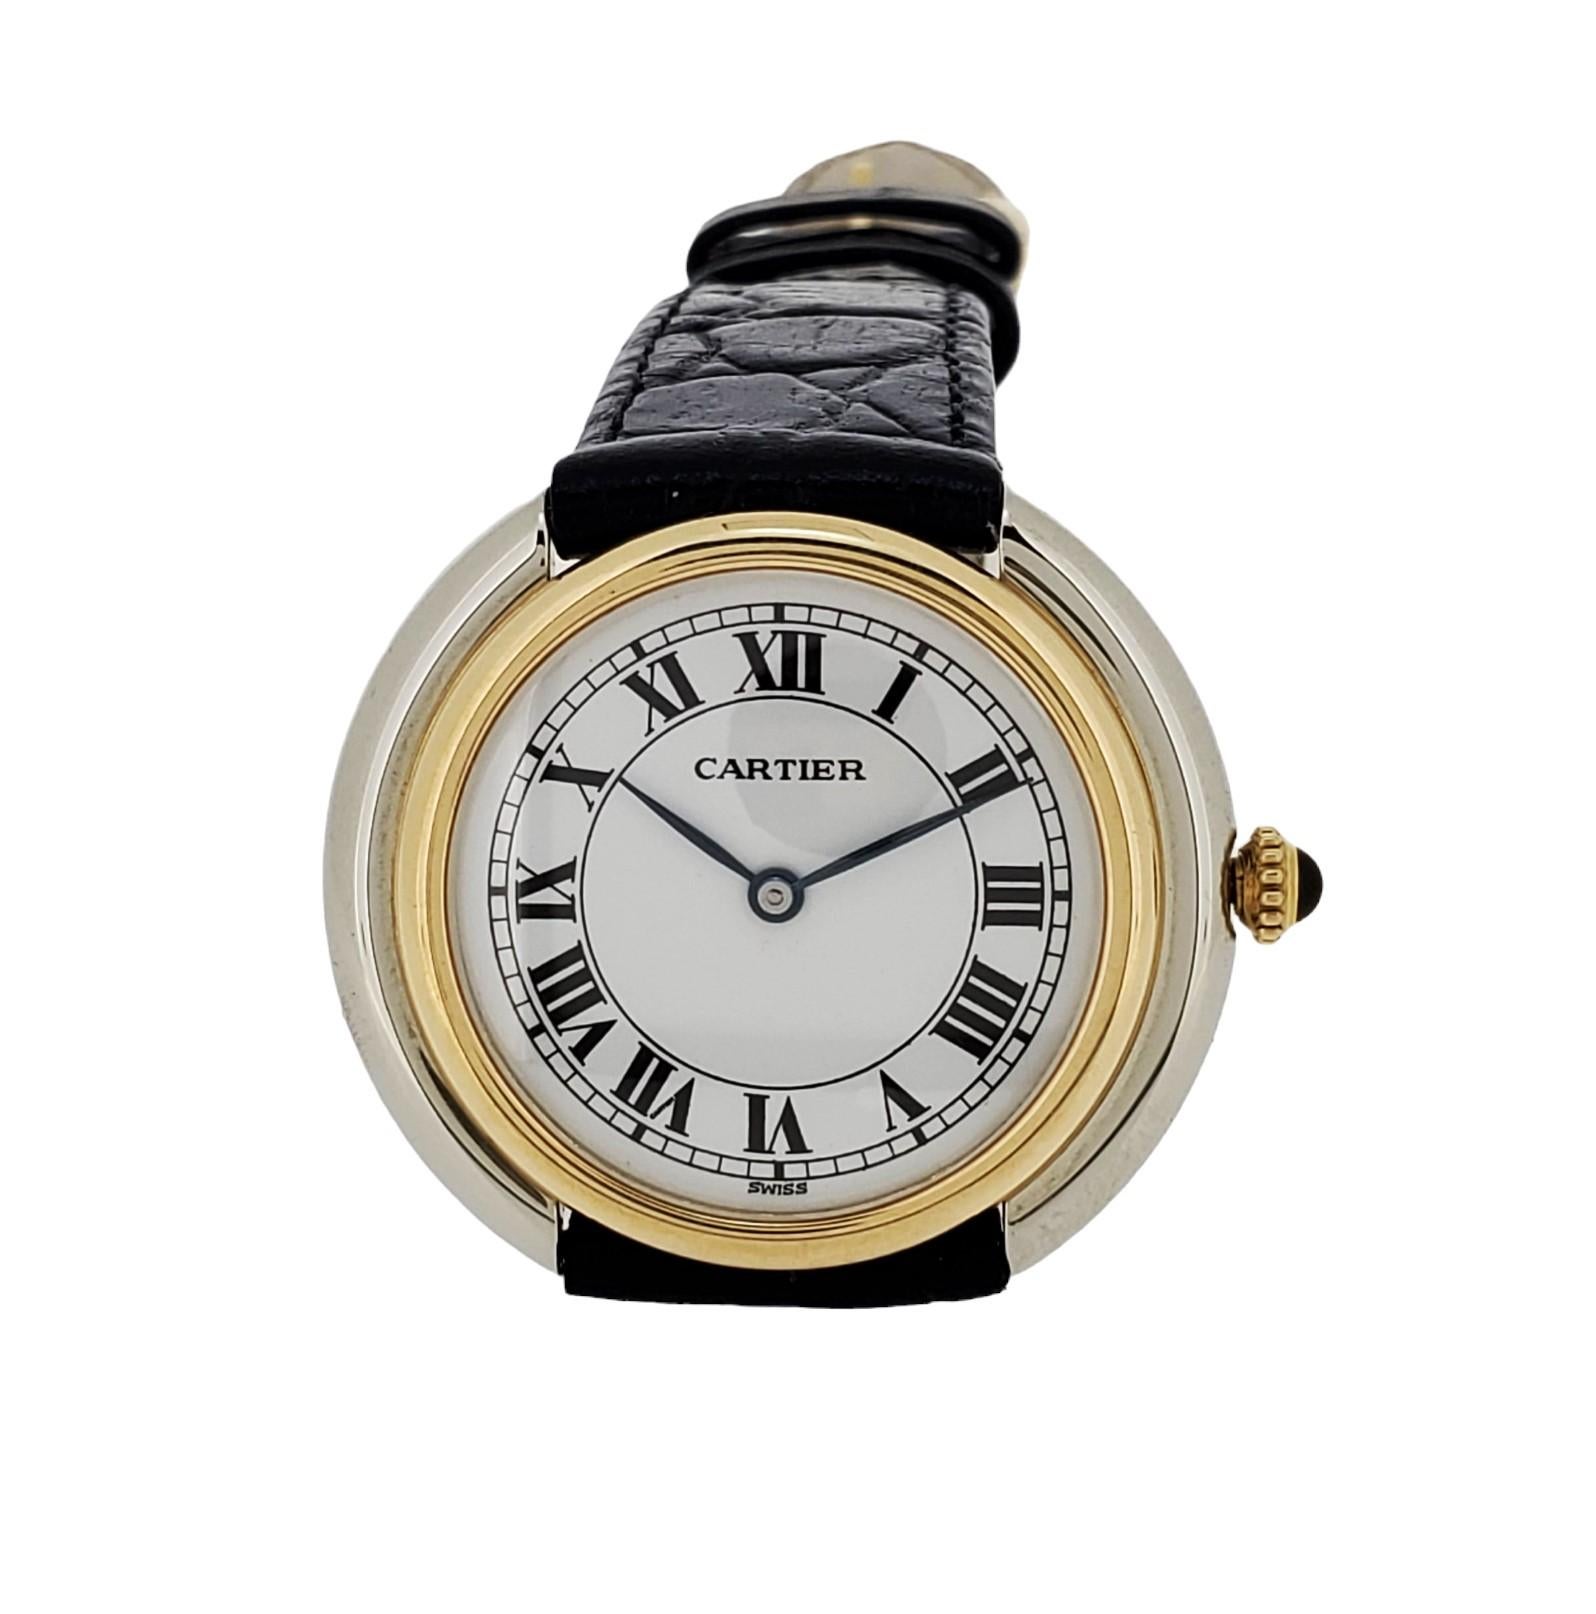 Cartier Paris Vendome 2-Tone Large Watch 34mm, Manual wind, Circa. 1973-1976 In Excellent Condition For Sale In Santa Monica, CA